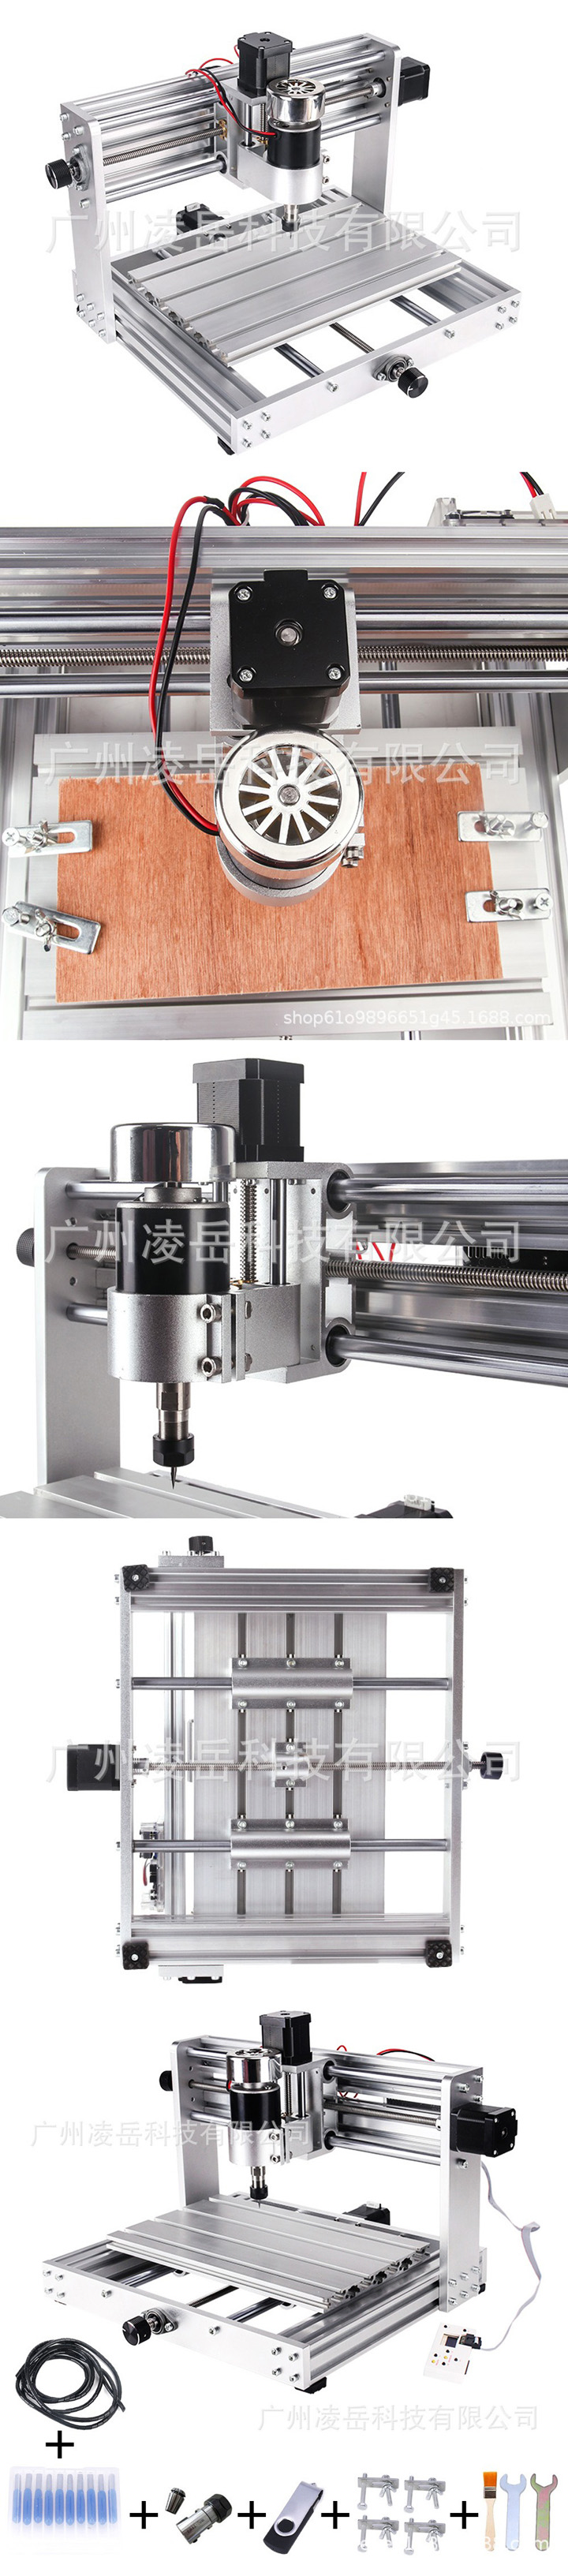 Incisore laser CNC professionale